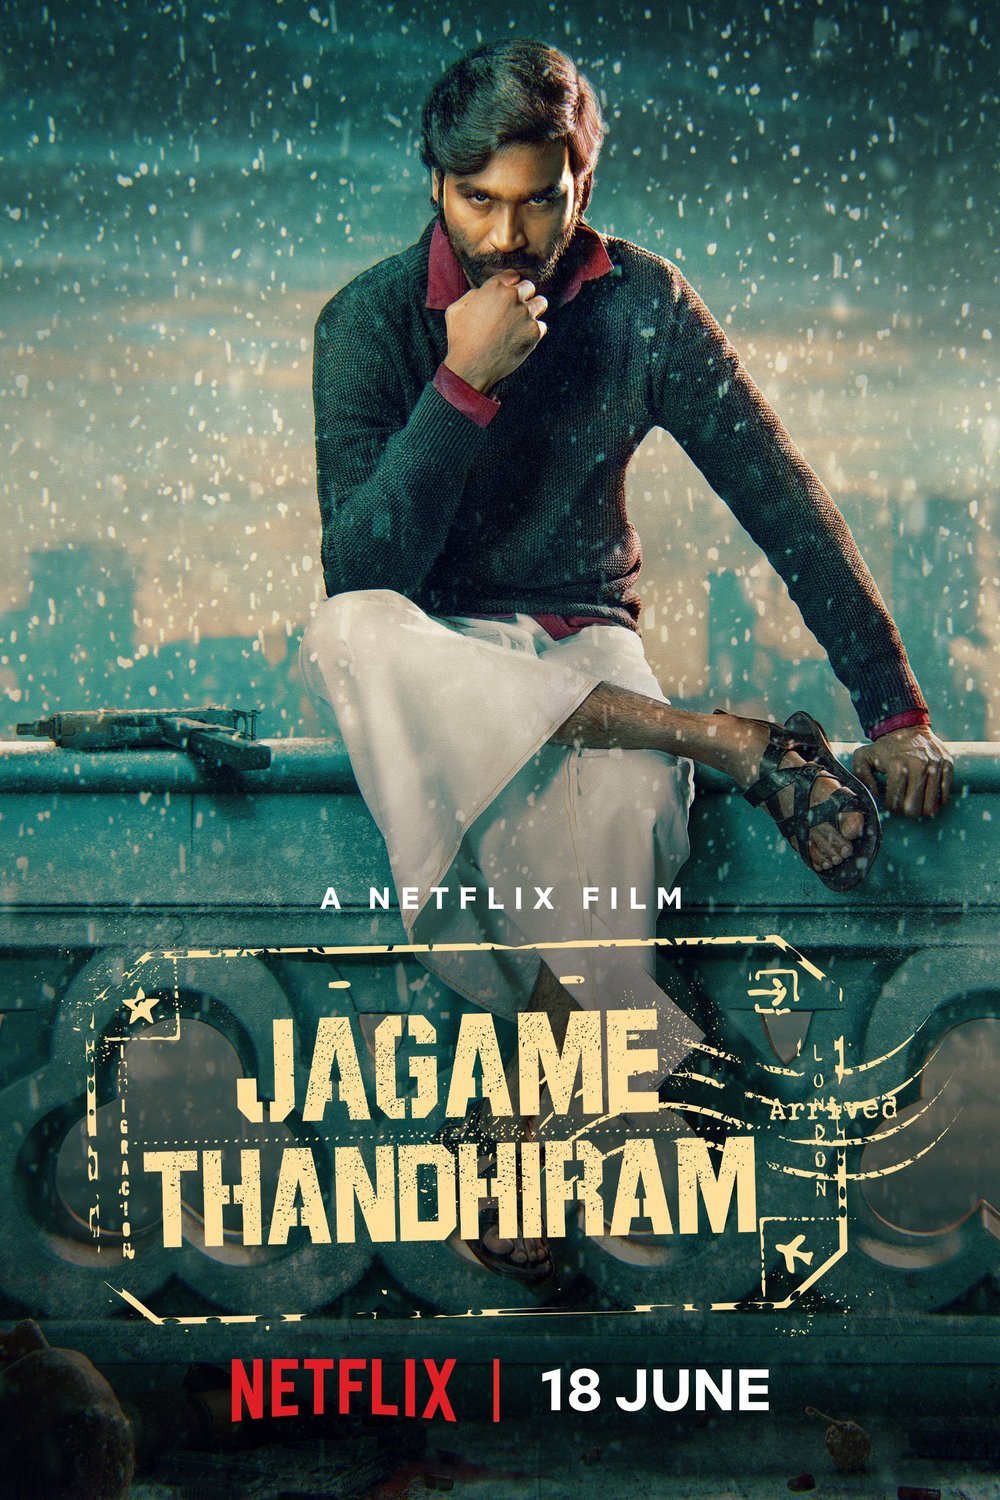 Tamil poster of the movie Jagame Thandhiram